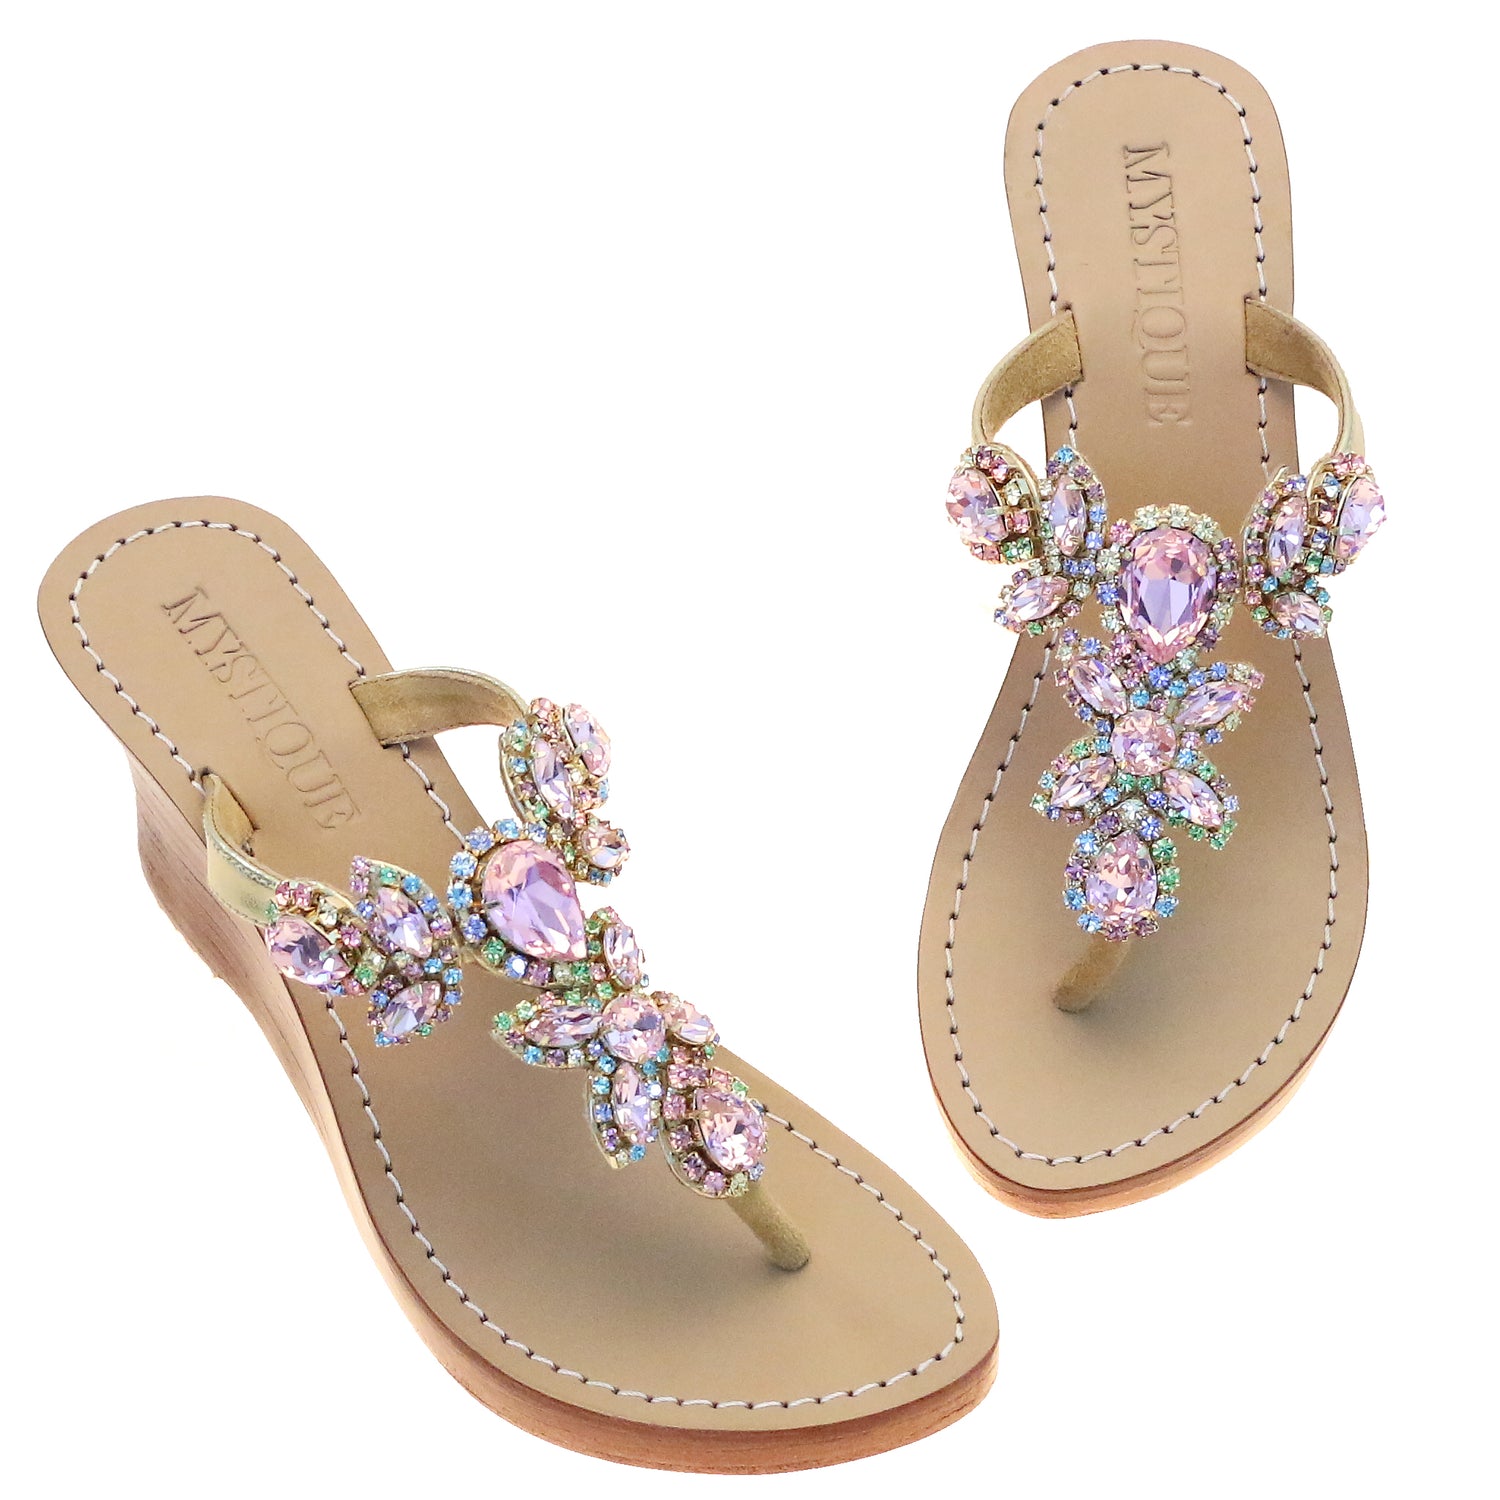 Belize - Women's Pink Jeweled Wedge Sandals | Mystique Sandals